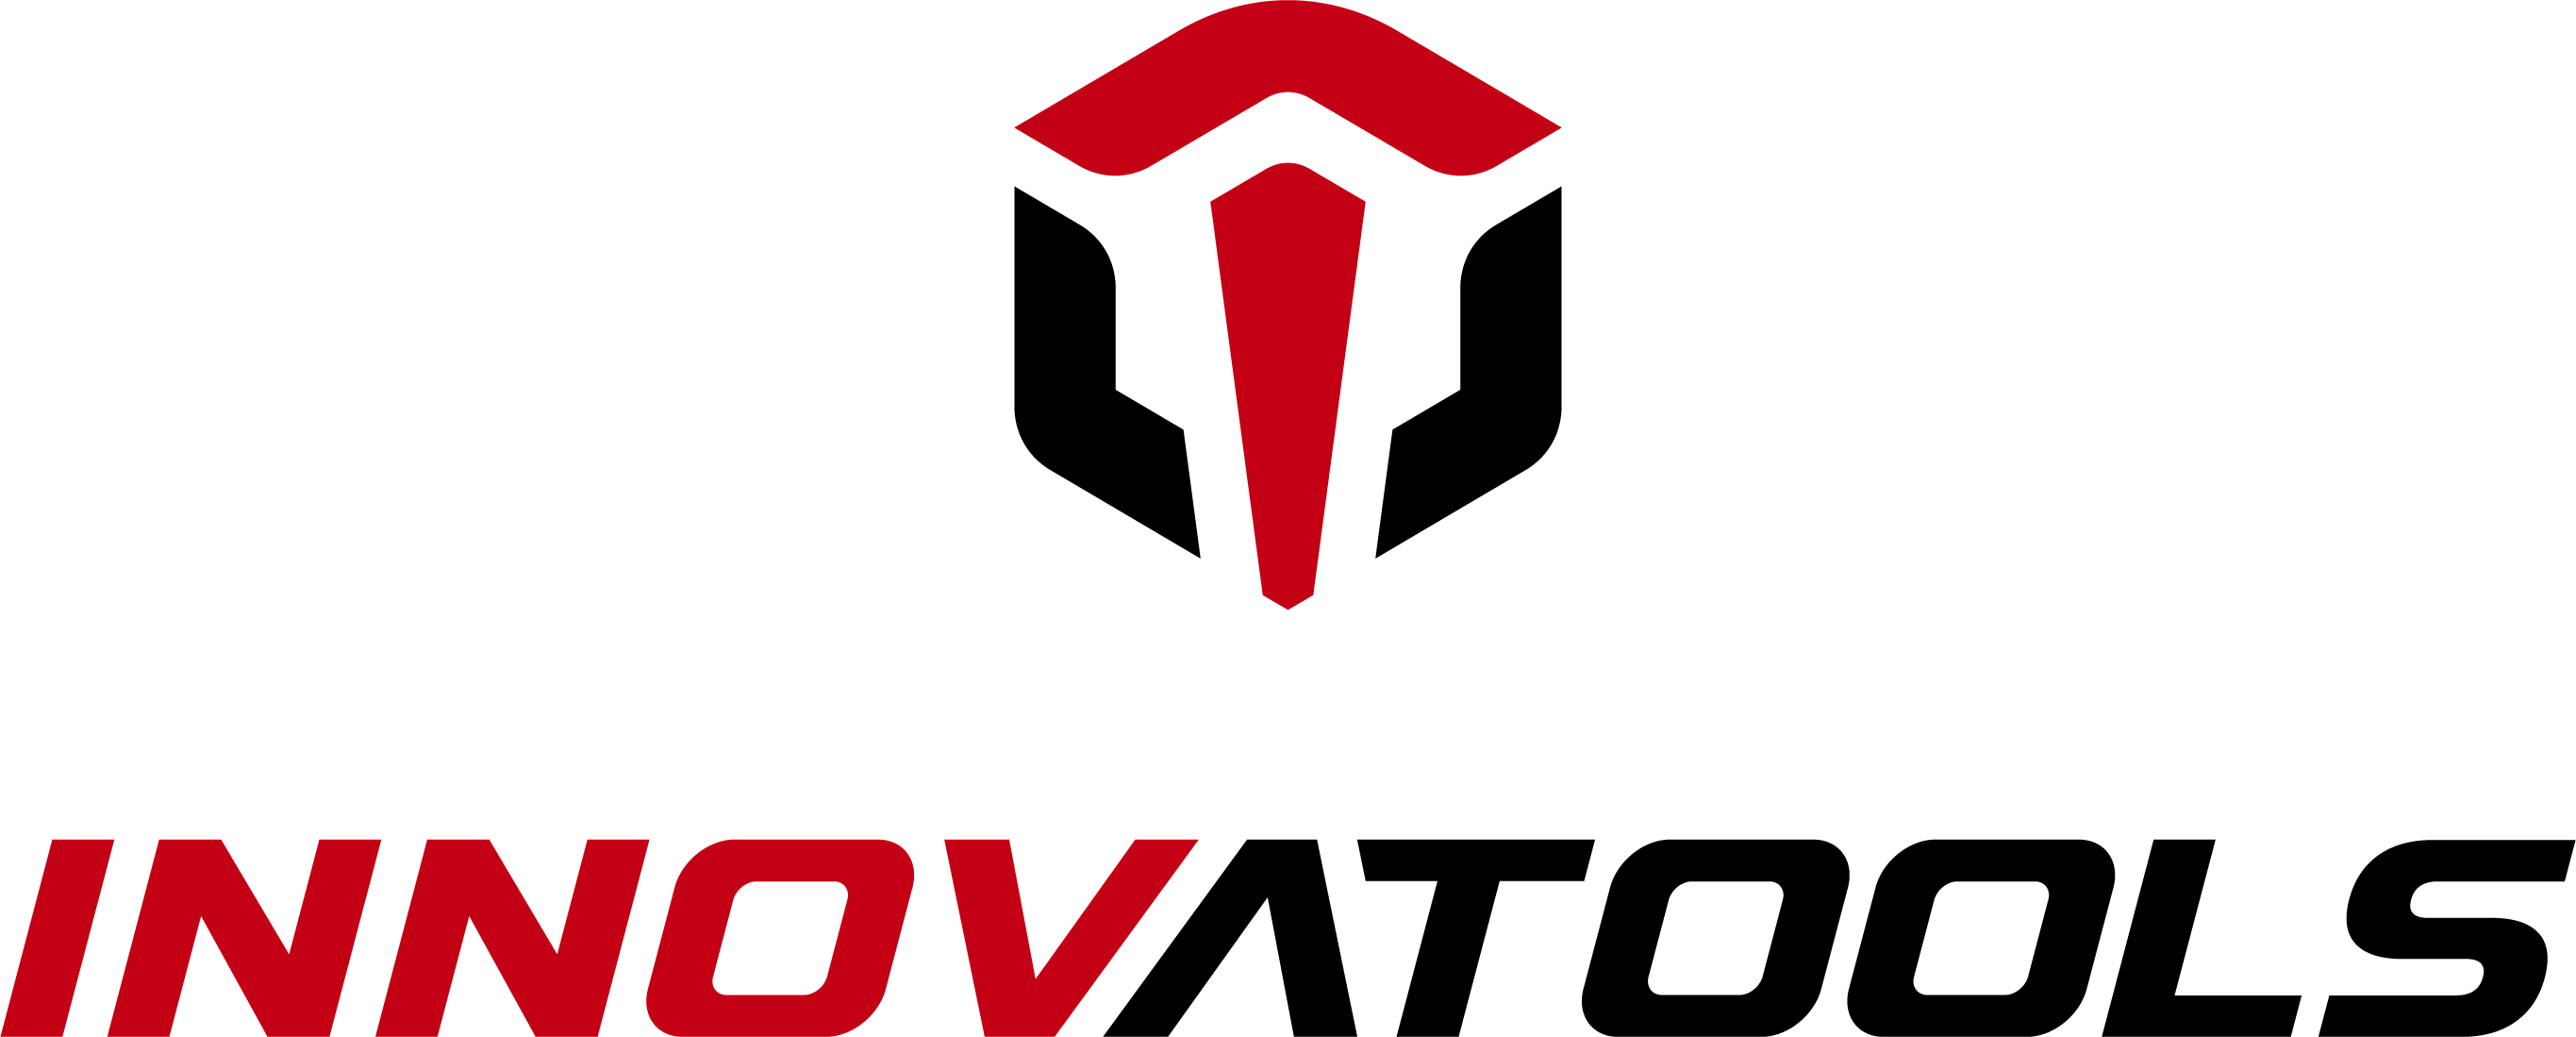 Innovatools logo